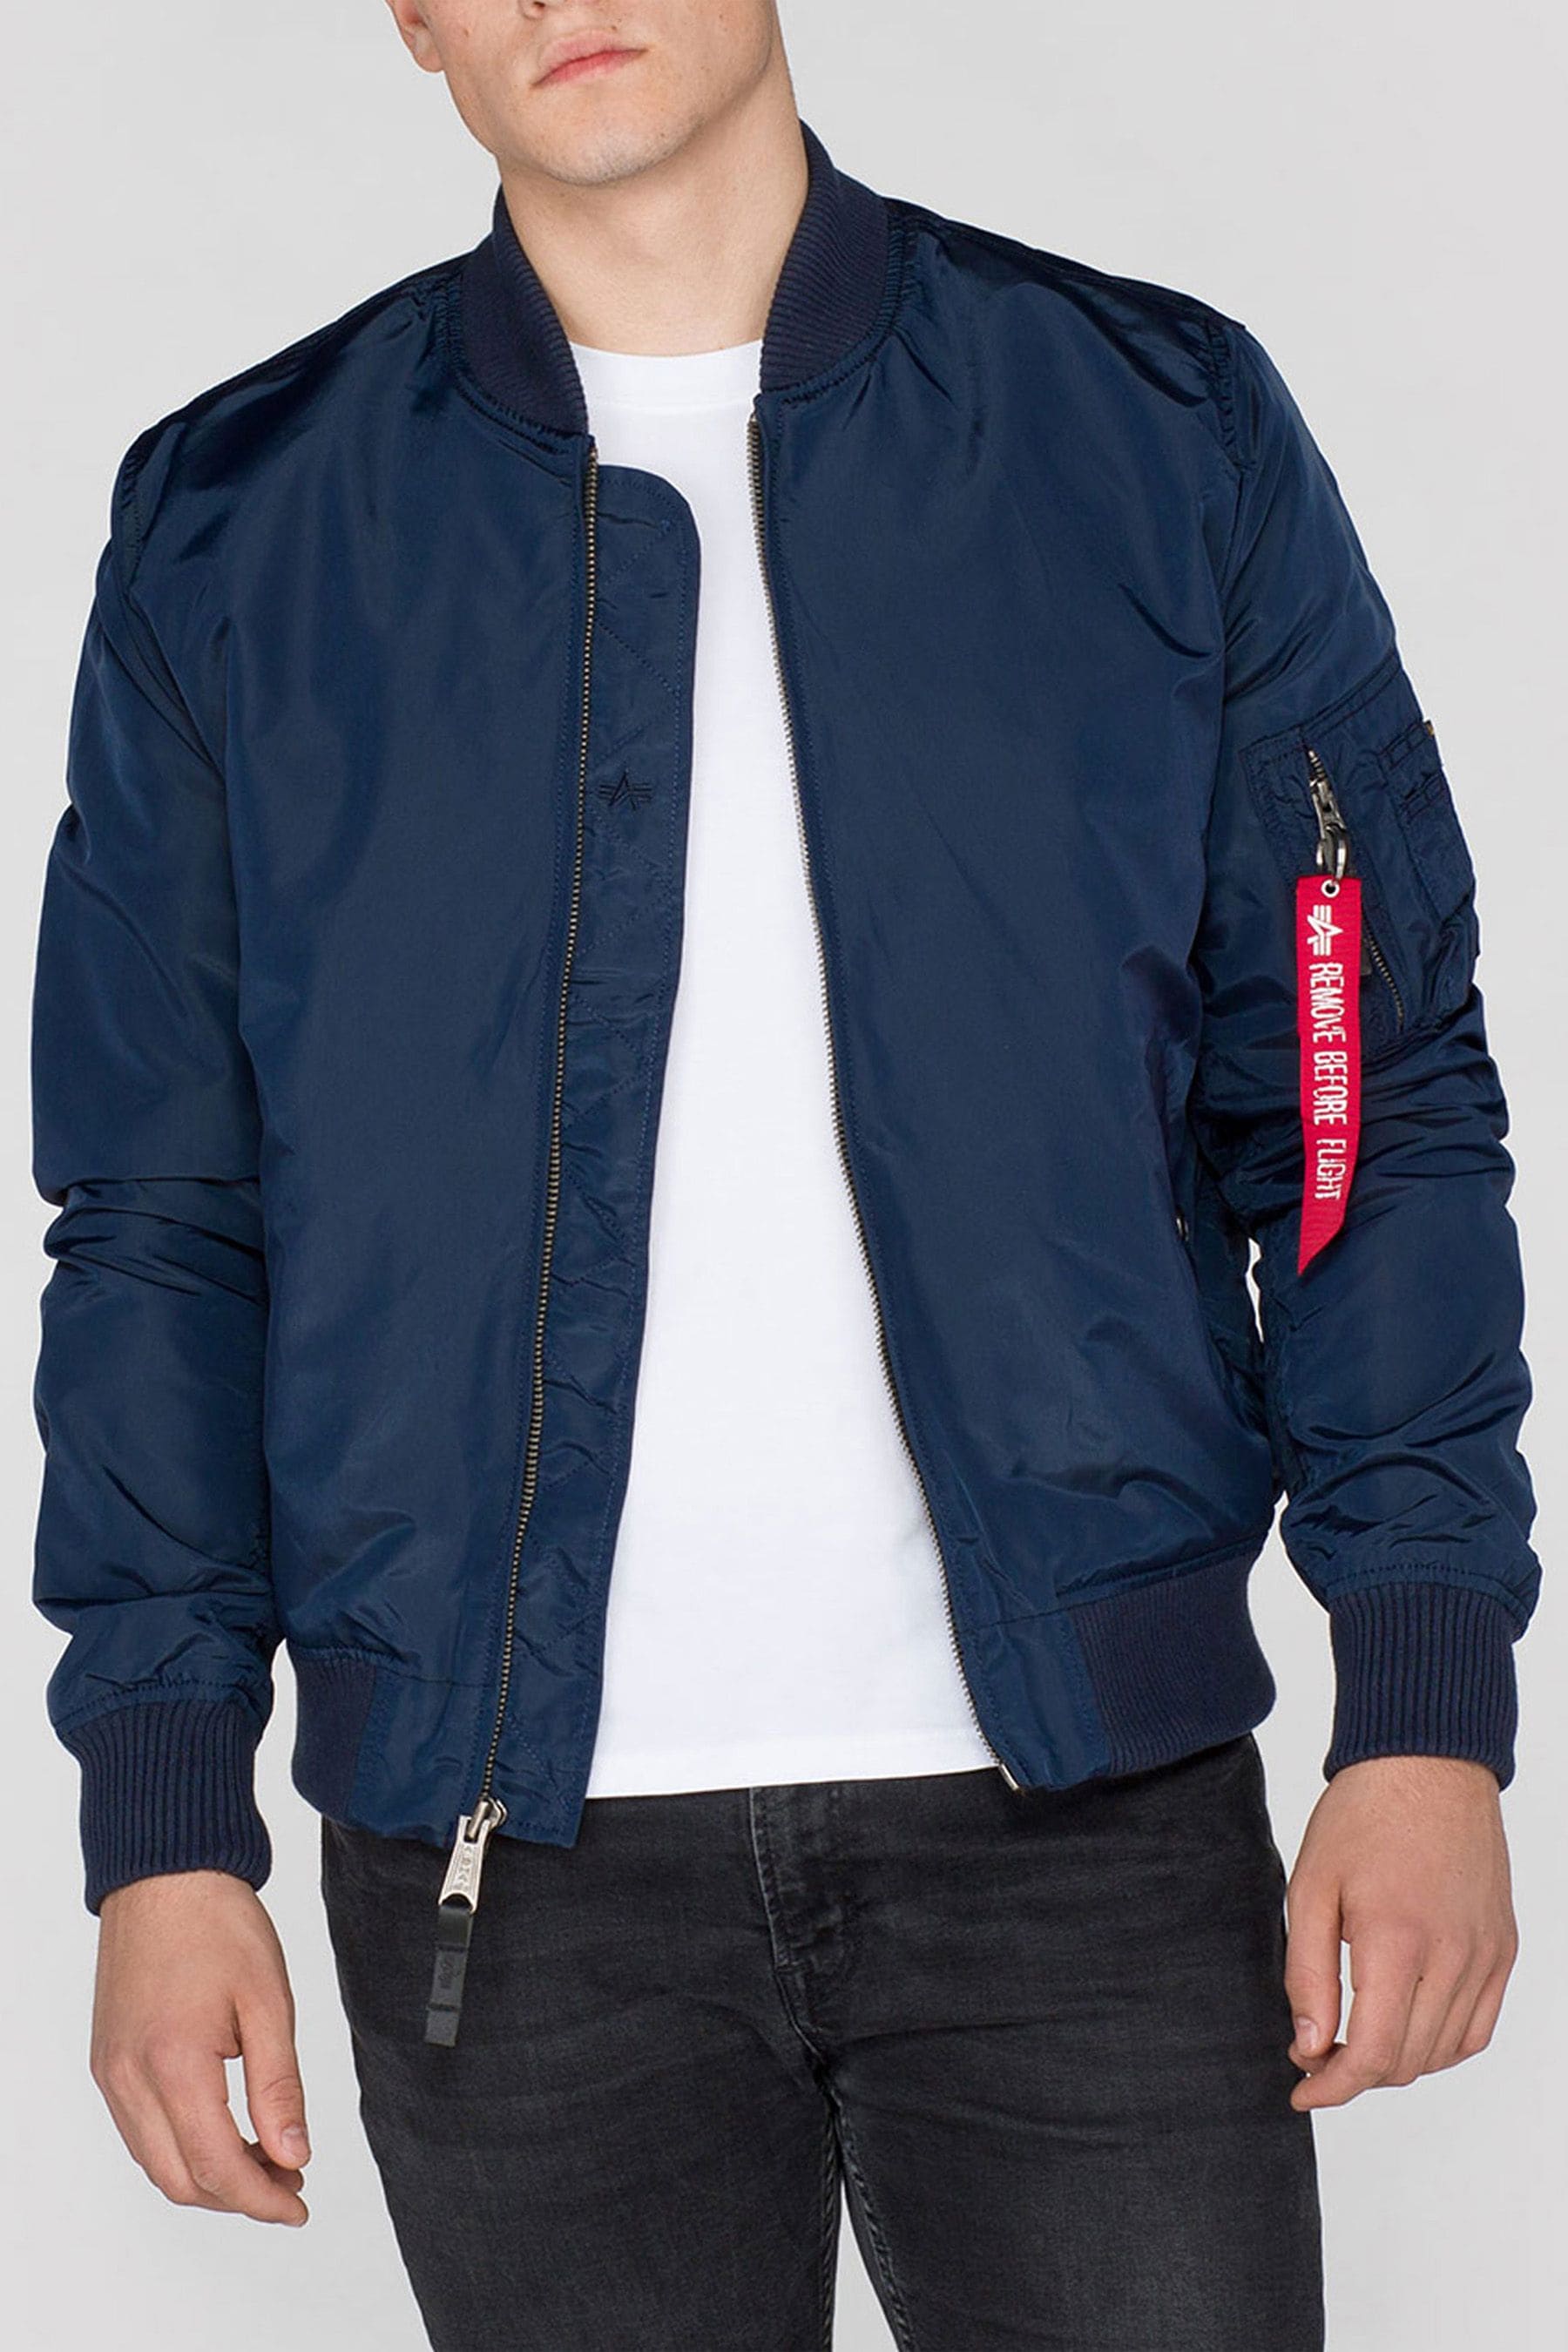 Buy Luke 1977 Rep Blue MA1 TT Jacket from the Next UK online shop